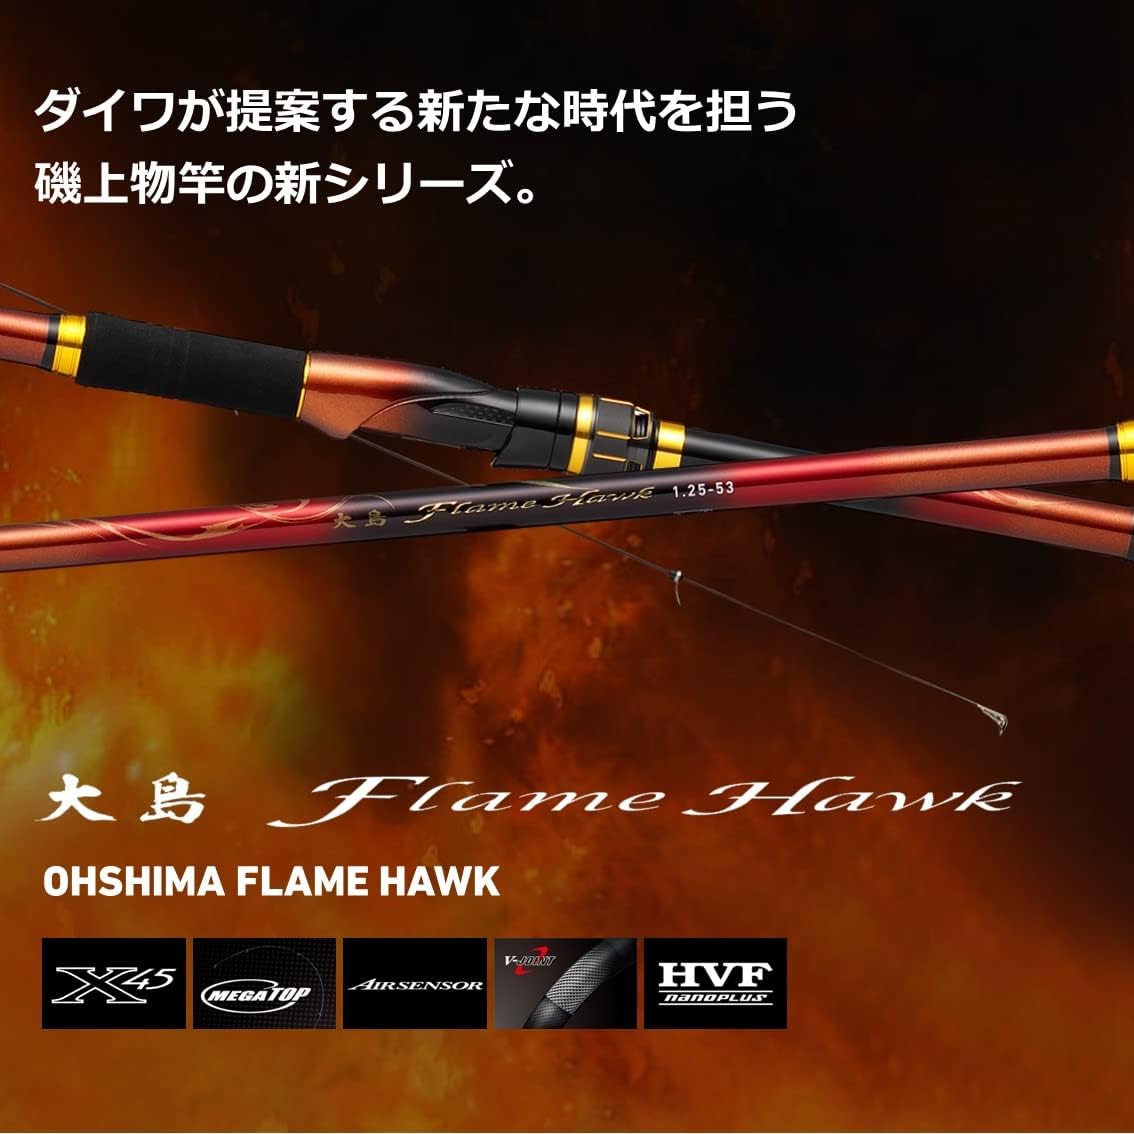 Daiwa OSHIMA FLAME HAWK ISO Rod